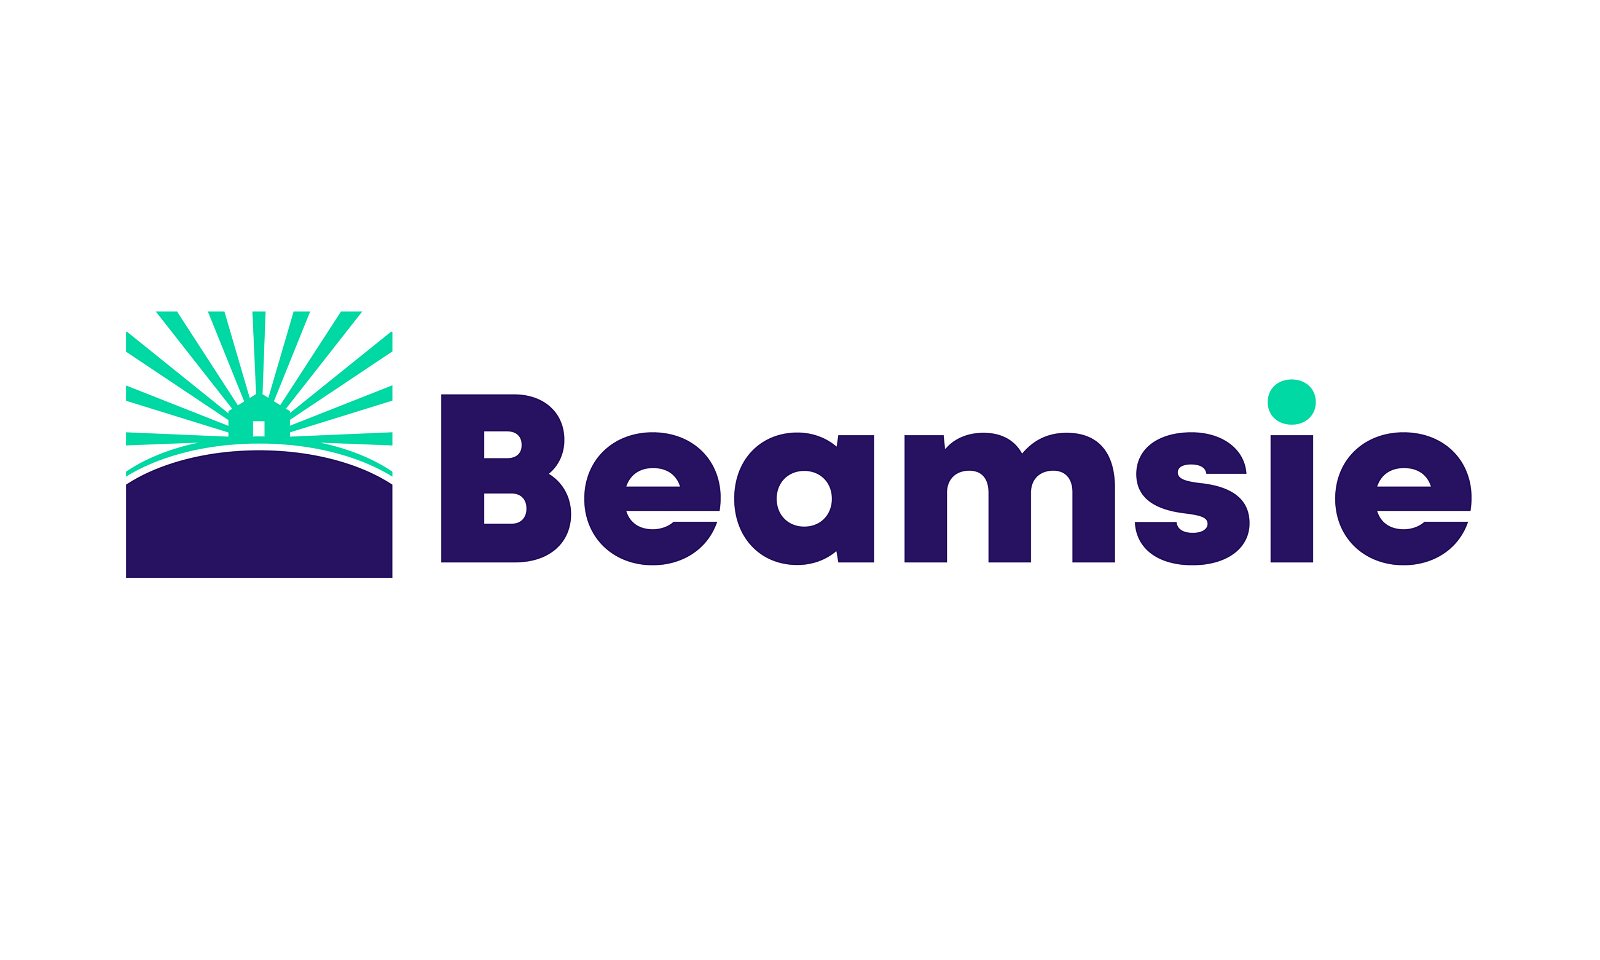 Beamsie.com - Creative brandable domain for sale